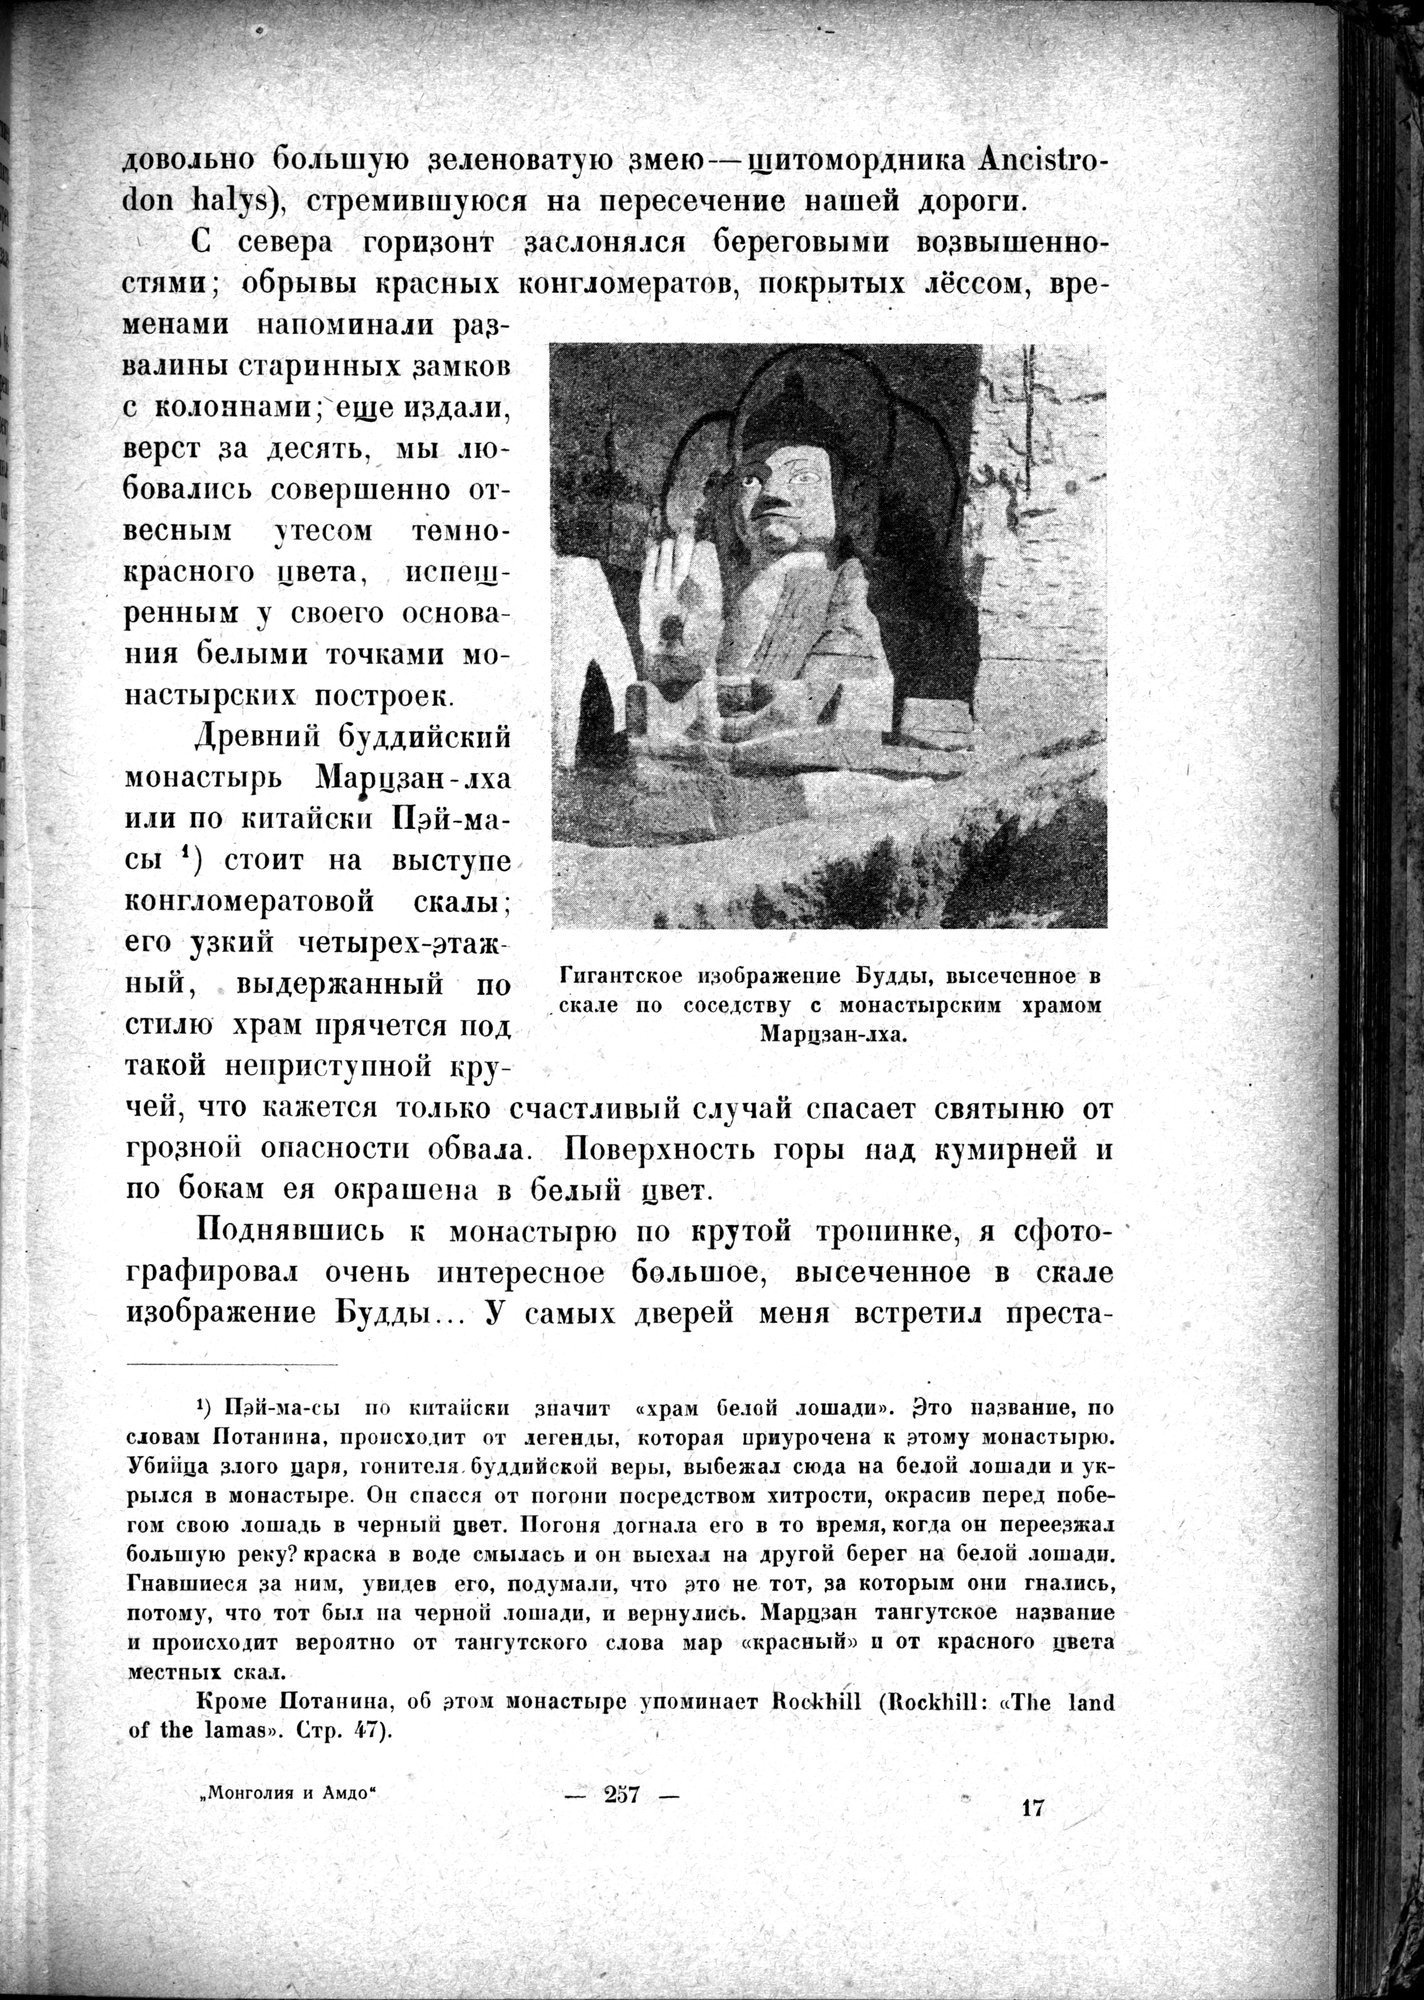 Mongoliya i Amdo i mertby gorod Khara-Khoto : vol.1 / Page 303 (Grayscale High Resolution Image)